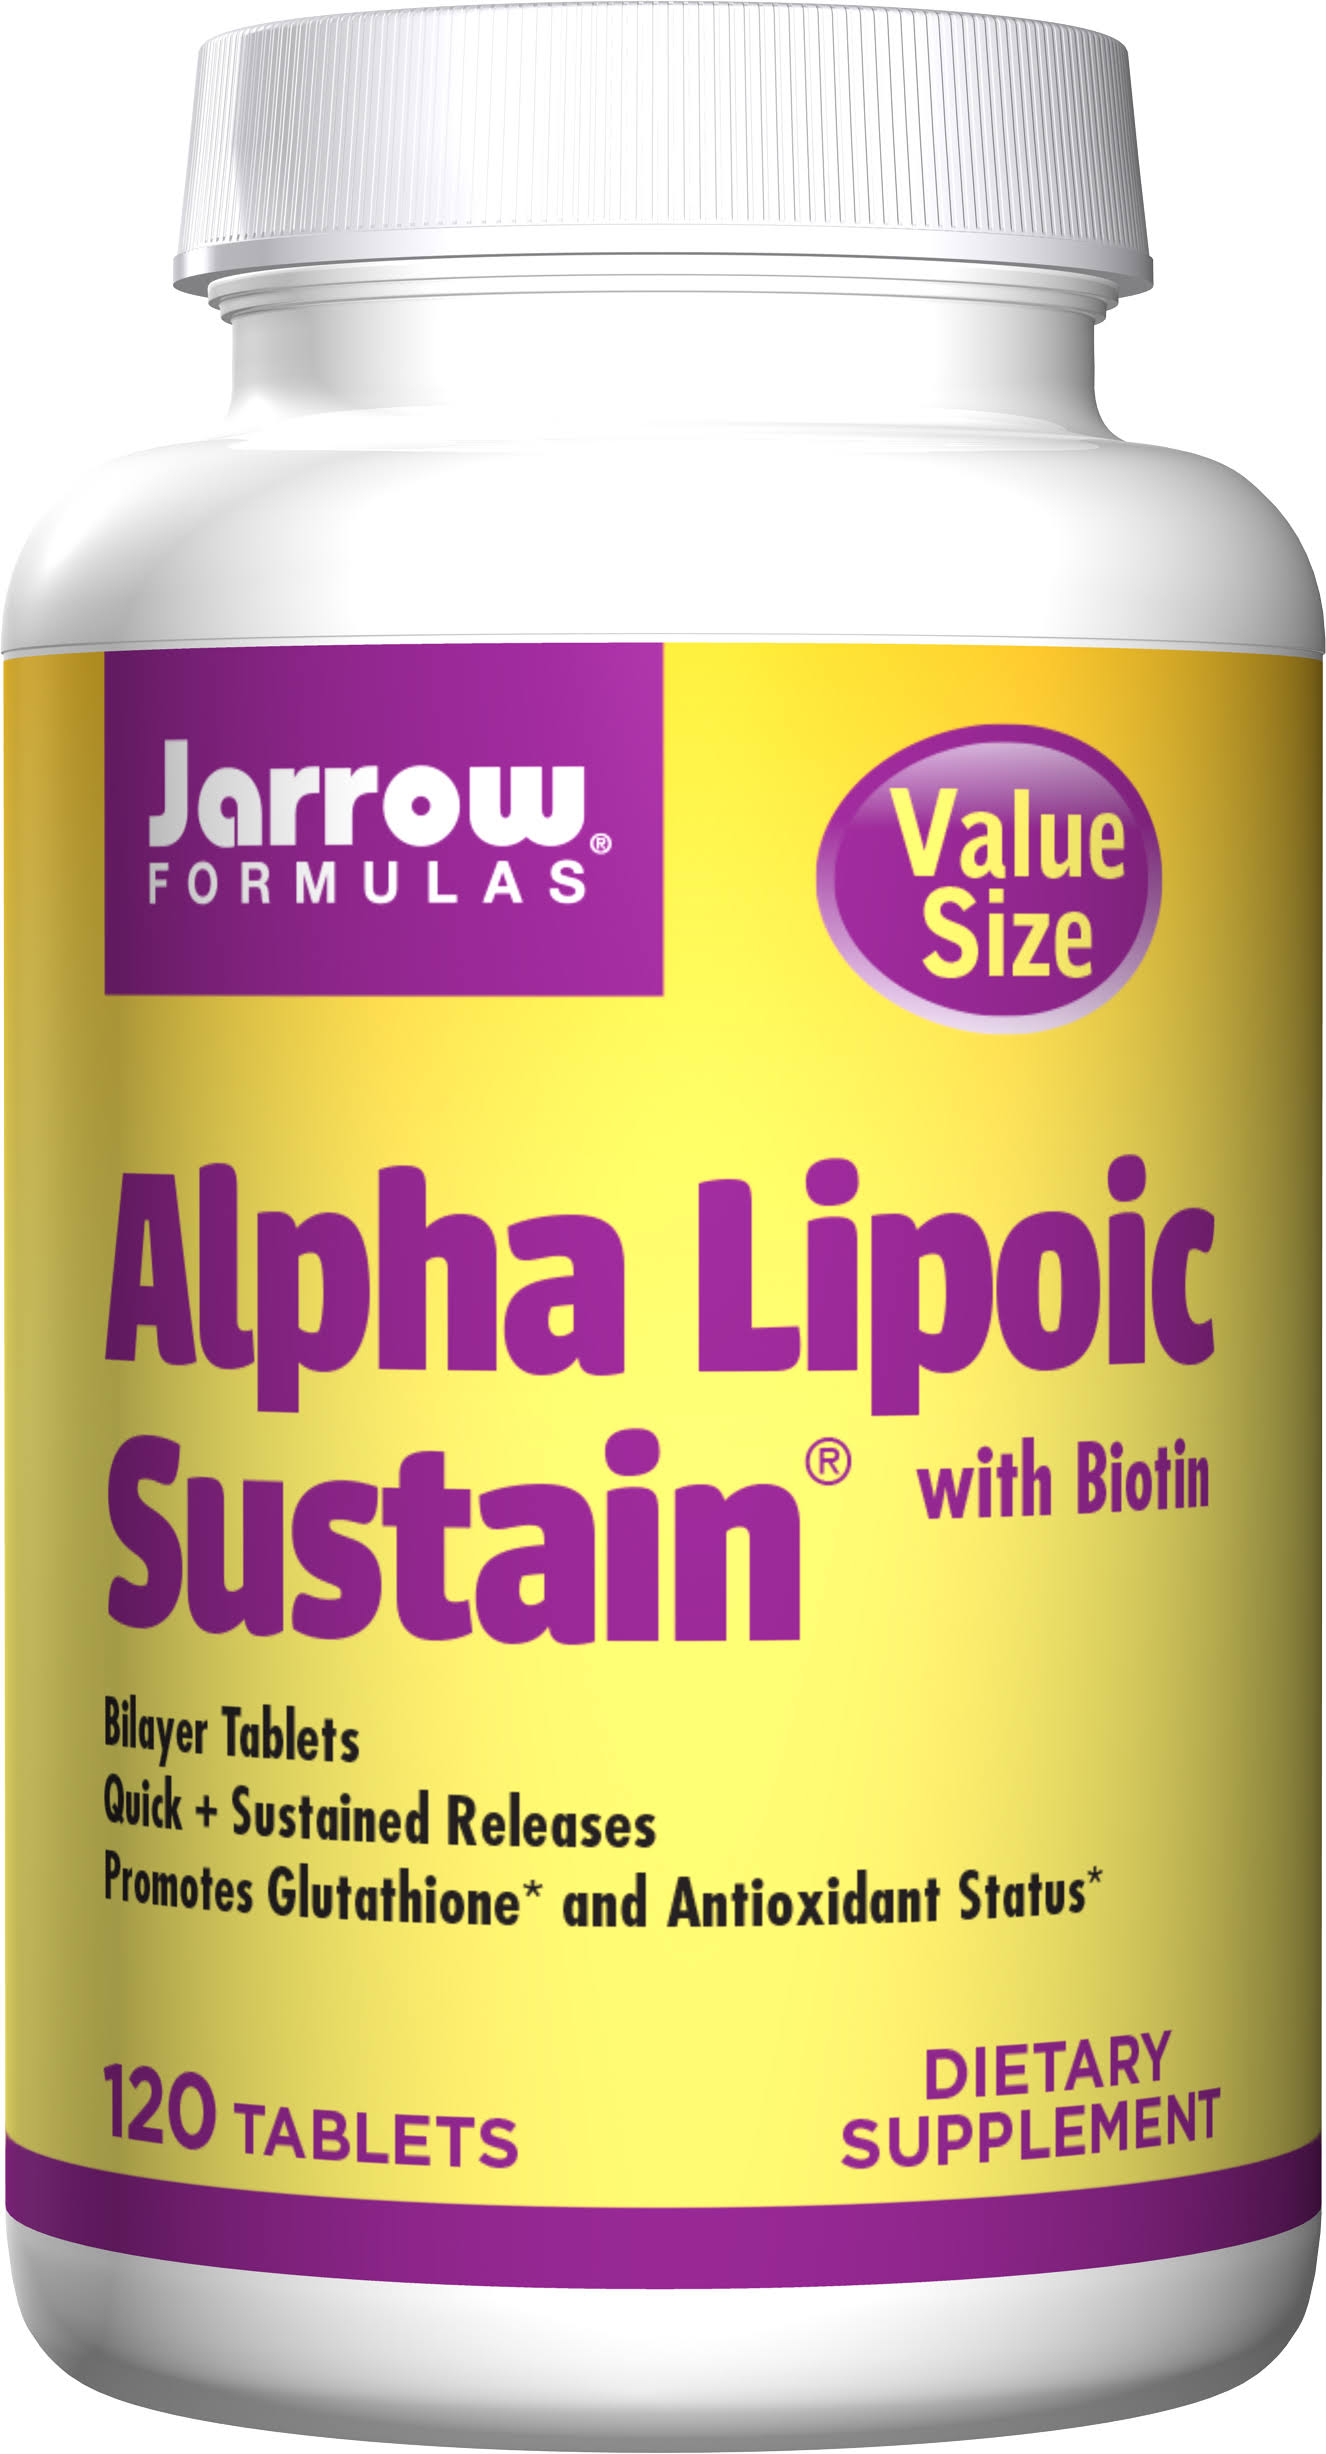 Jarrow Formulas Alpha Lipoic Sustain Supplement - 120 Count